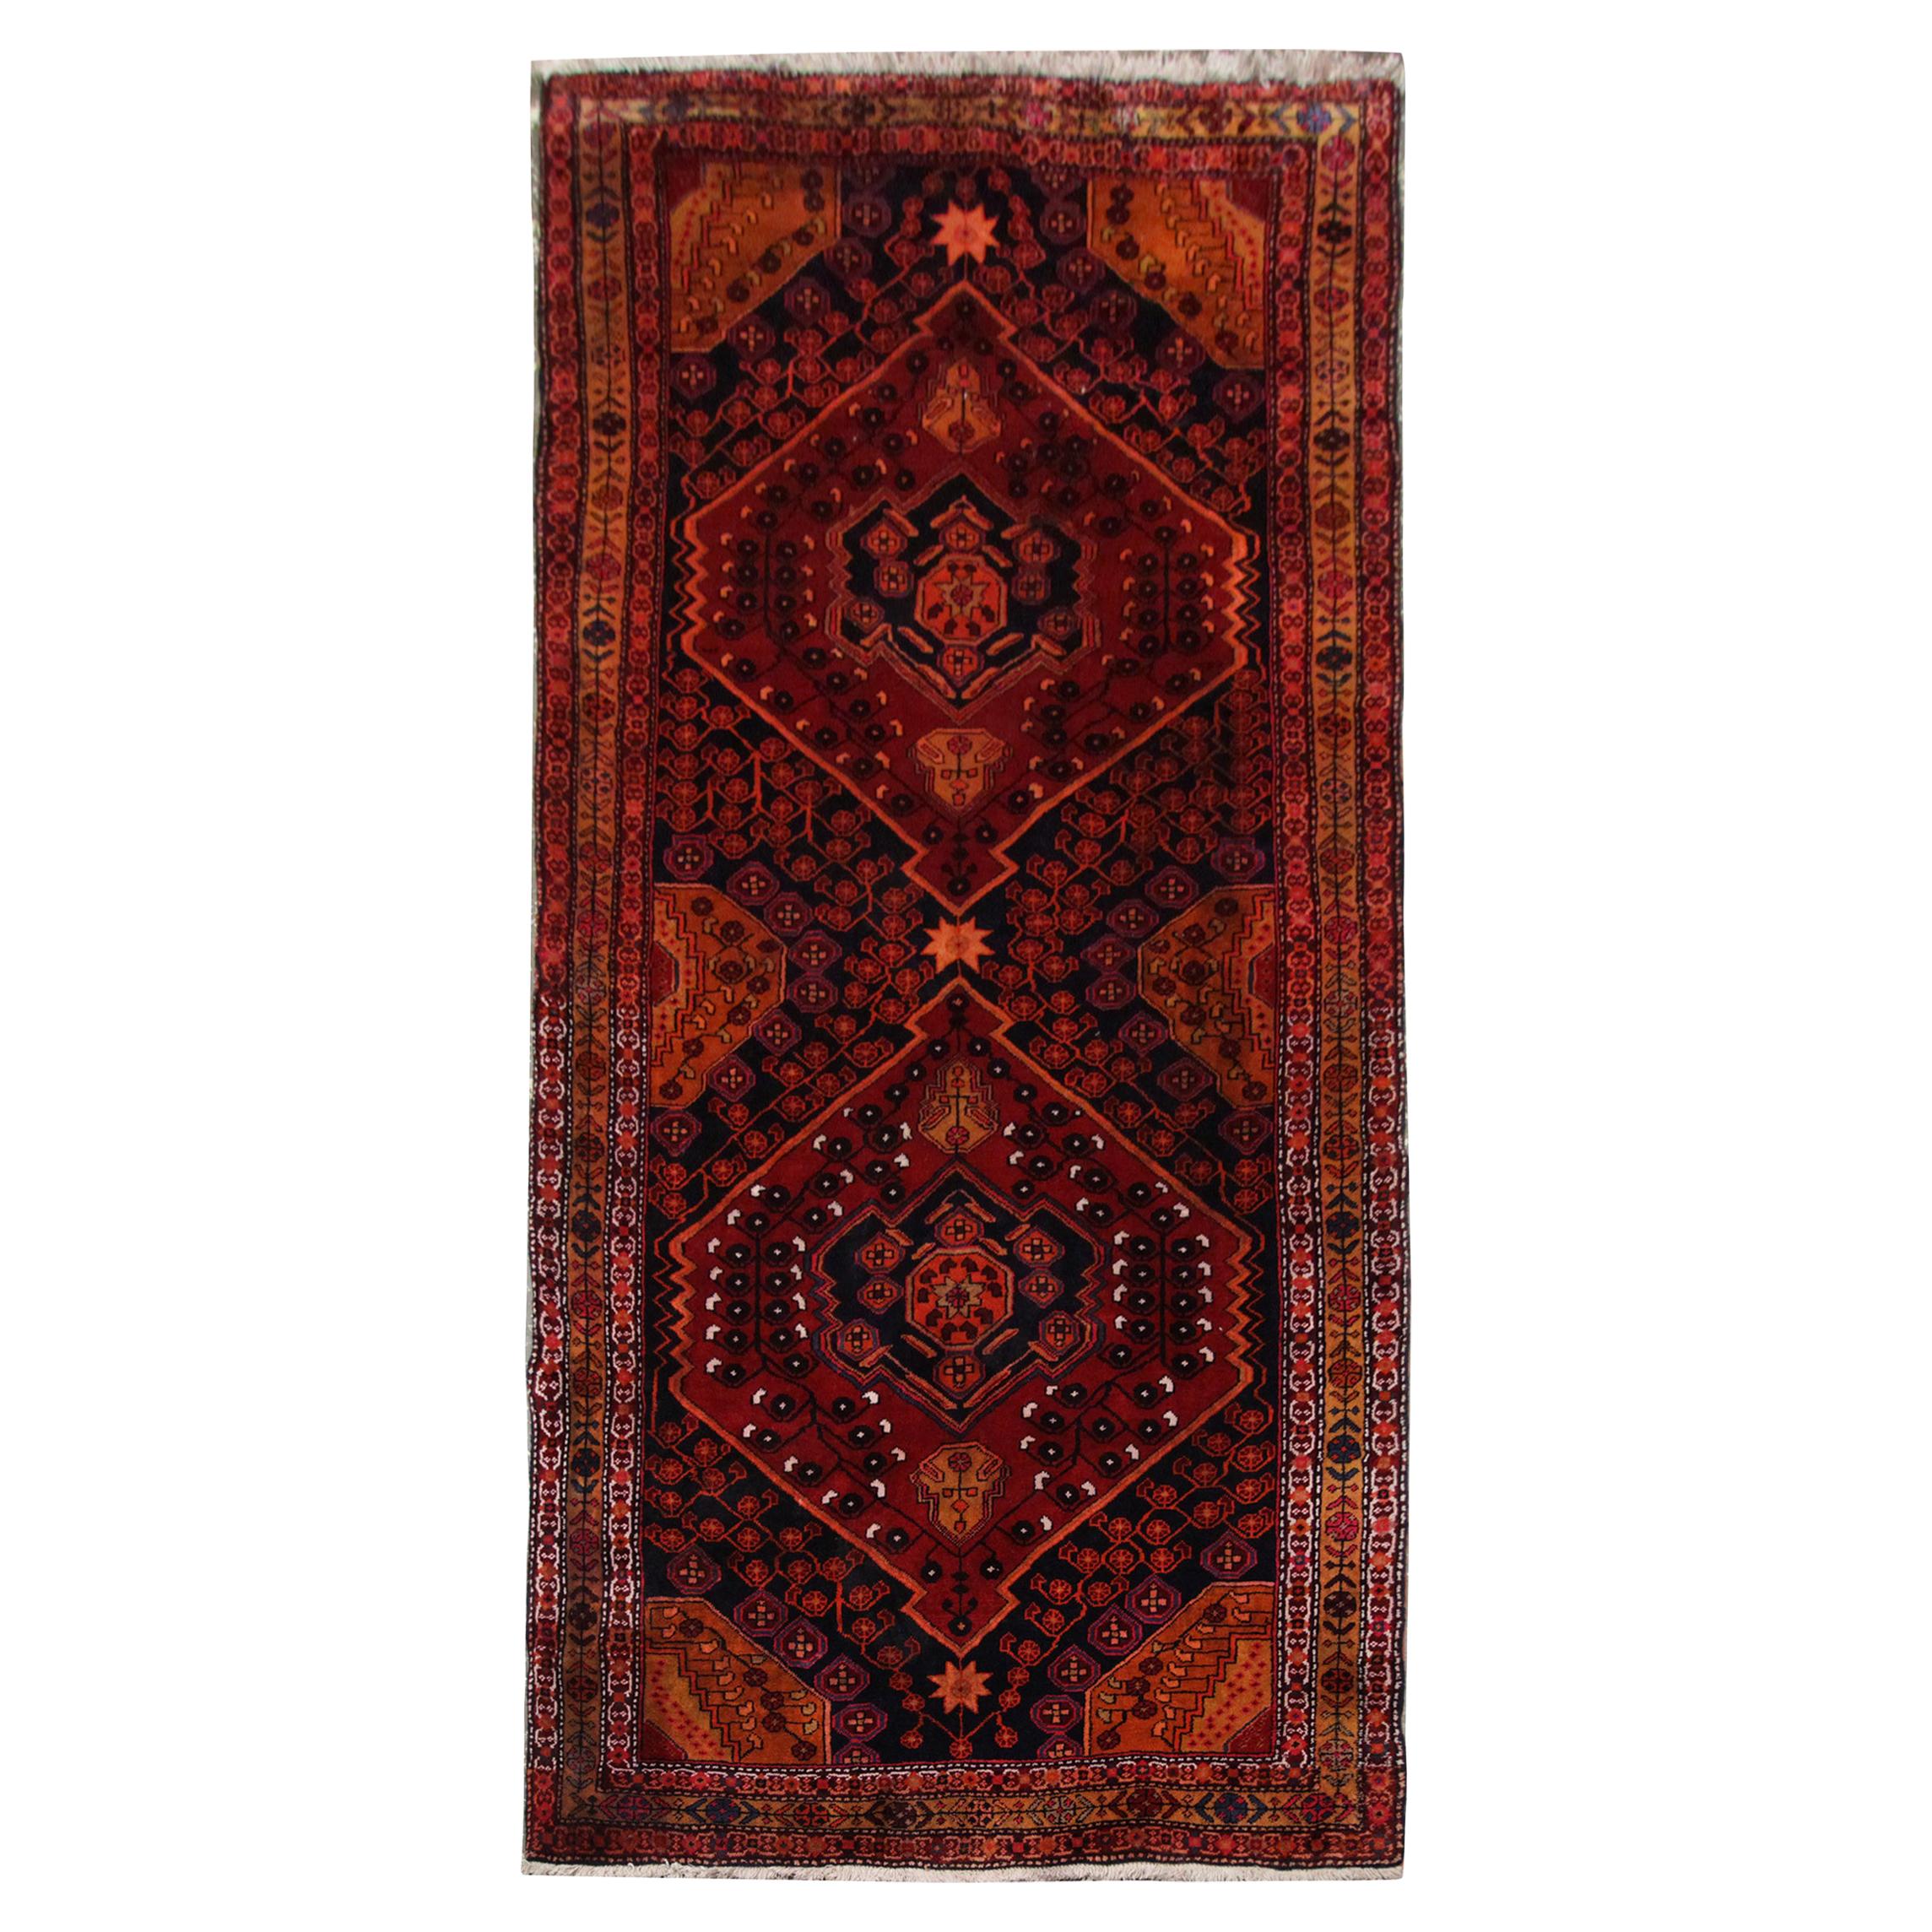 Antique Rug, Handmade Carpet Oriental Caucasian Runner, Rustic Living Room Rug